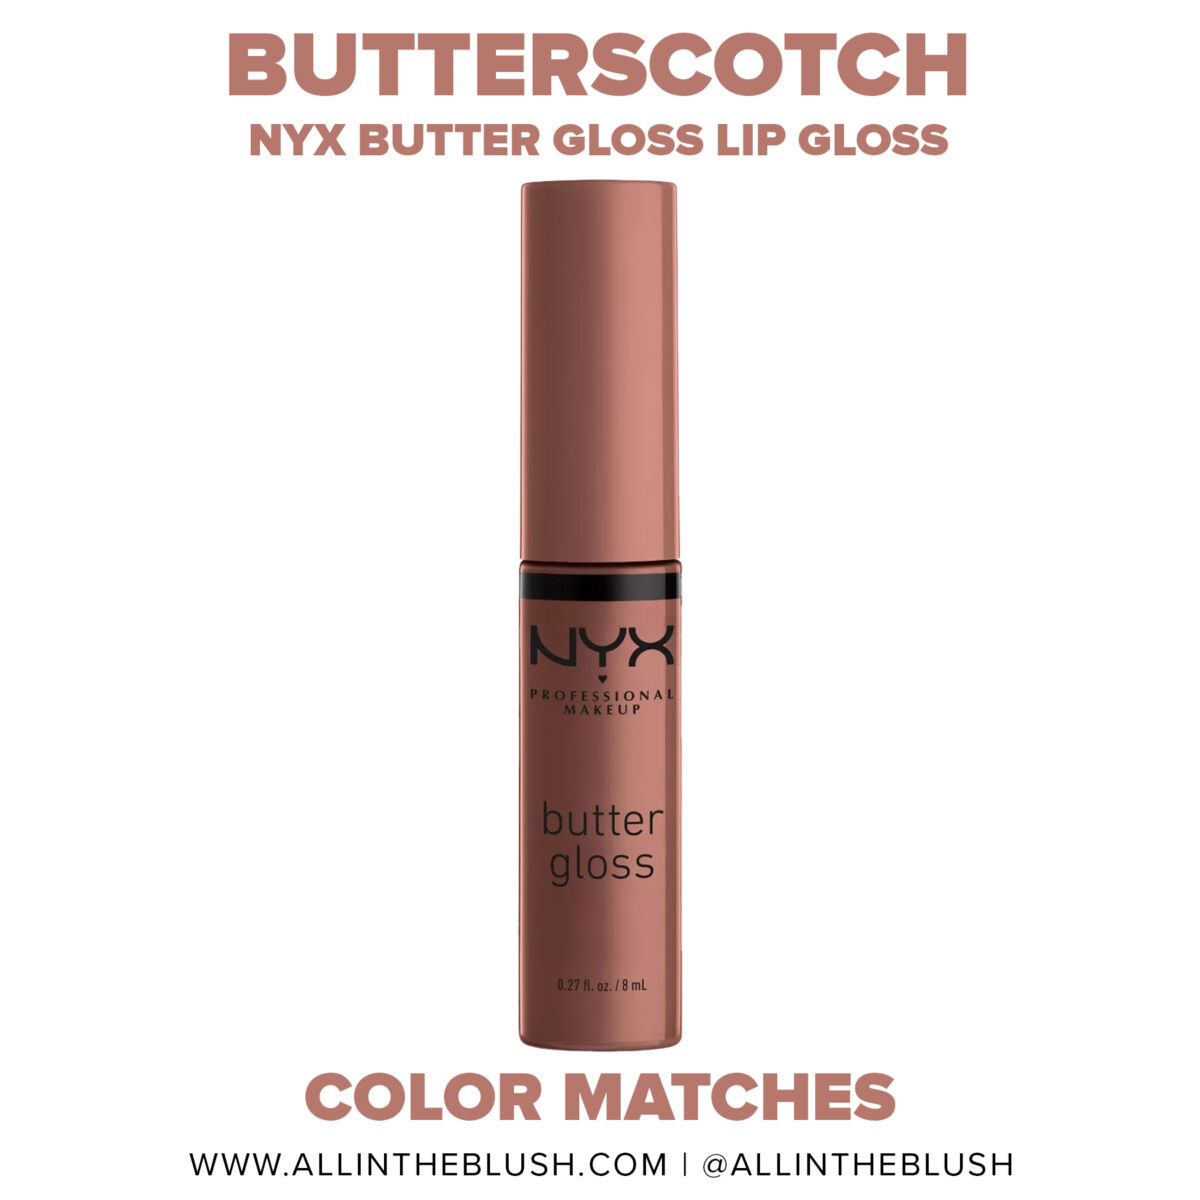 NYX Butterscotch Butter Gloss Color Matches